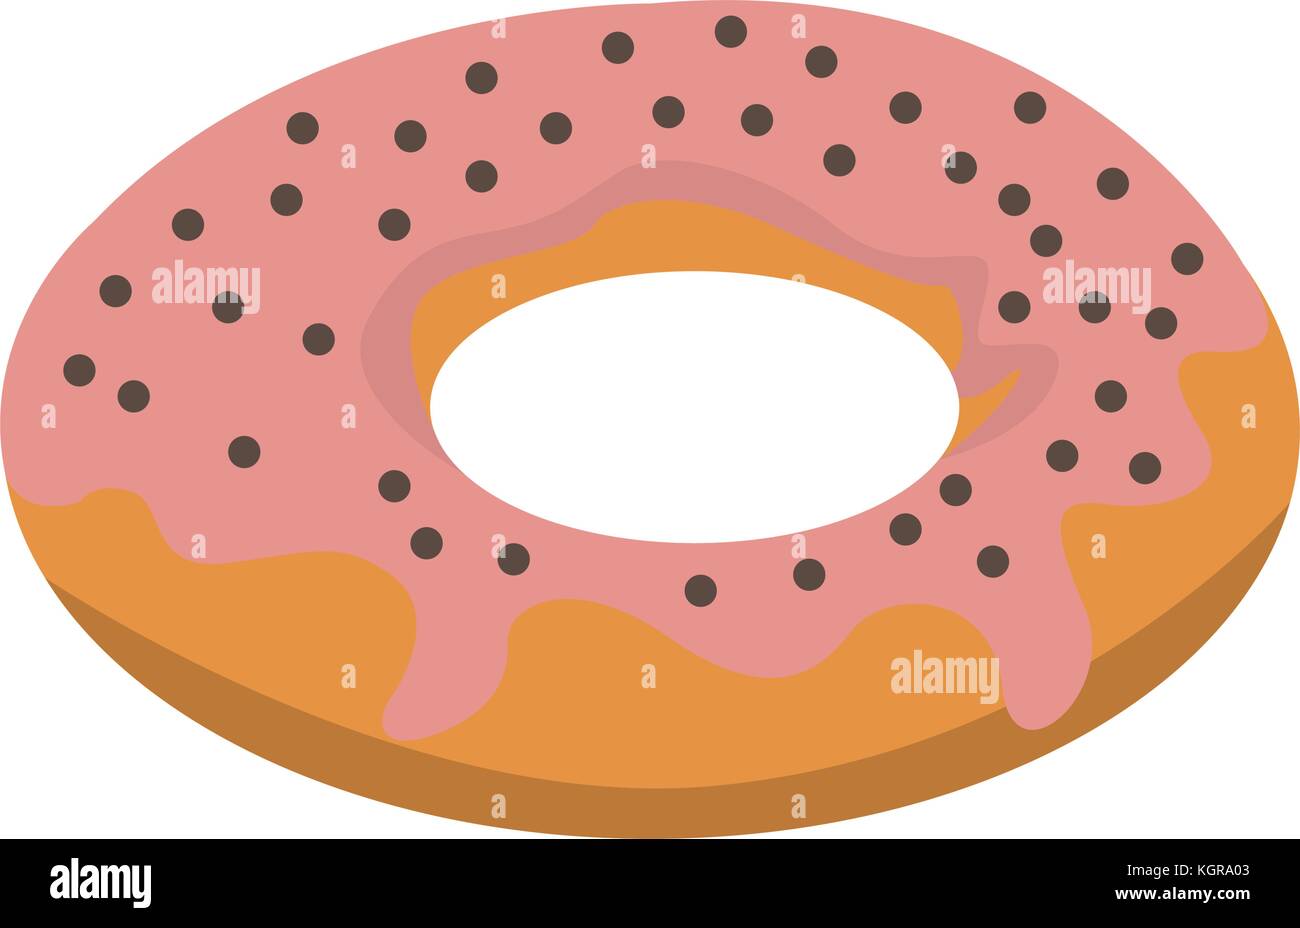 Isolated donut illustration Stock Vector